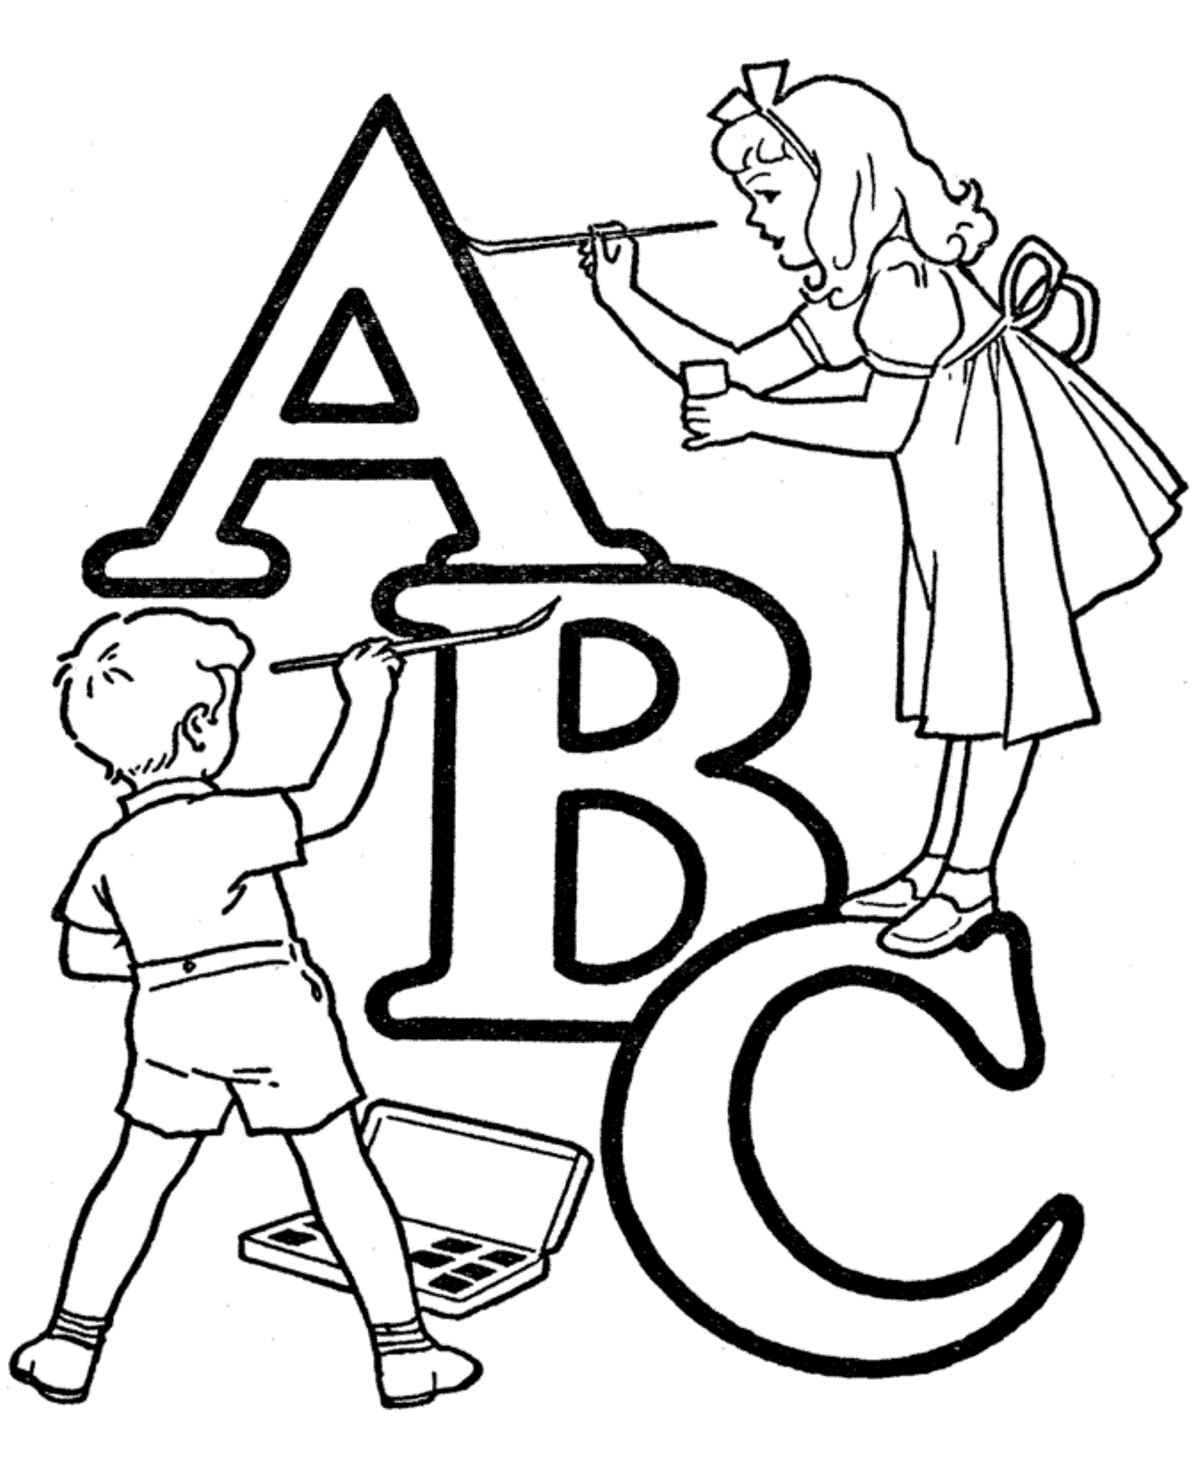 abc coloring sheets english alphabet coloring pages judy havrilla coloring sheets abc 